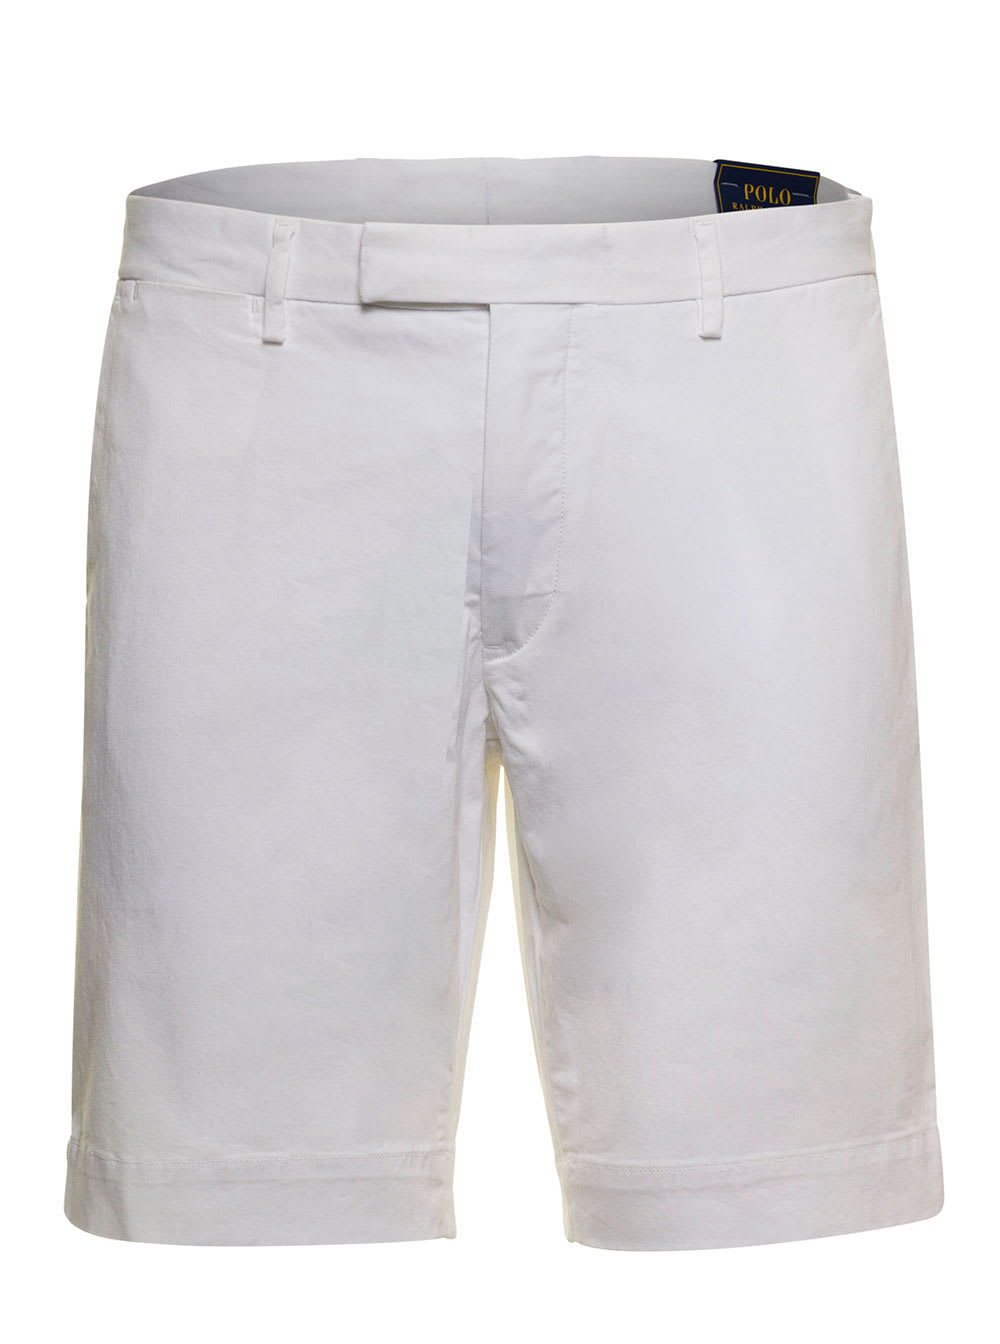 Mans White Cotton Bermuda Shorts